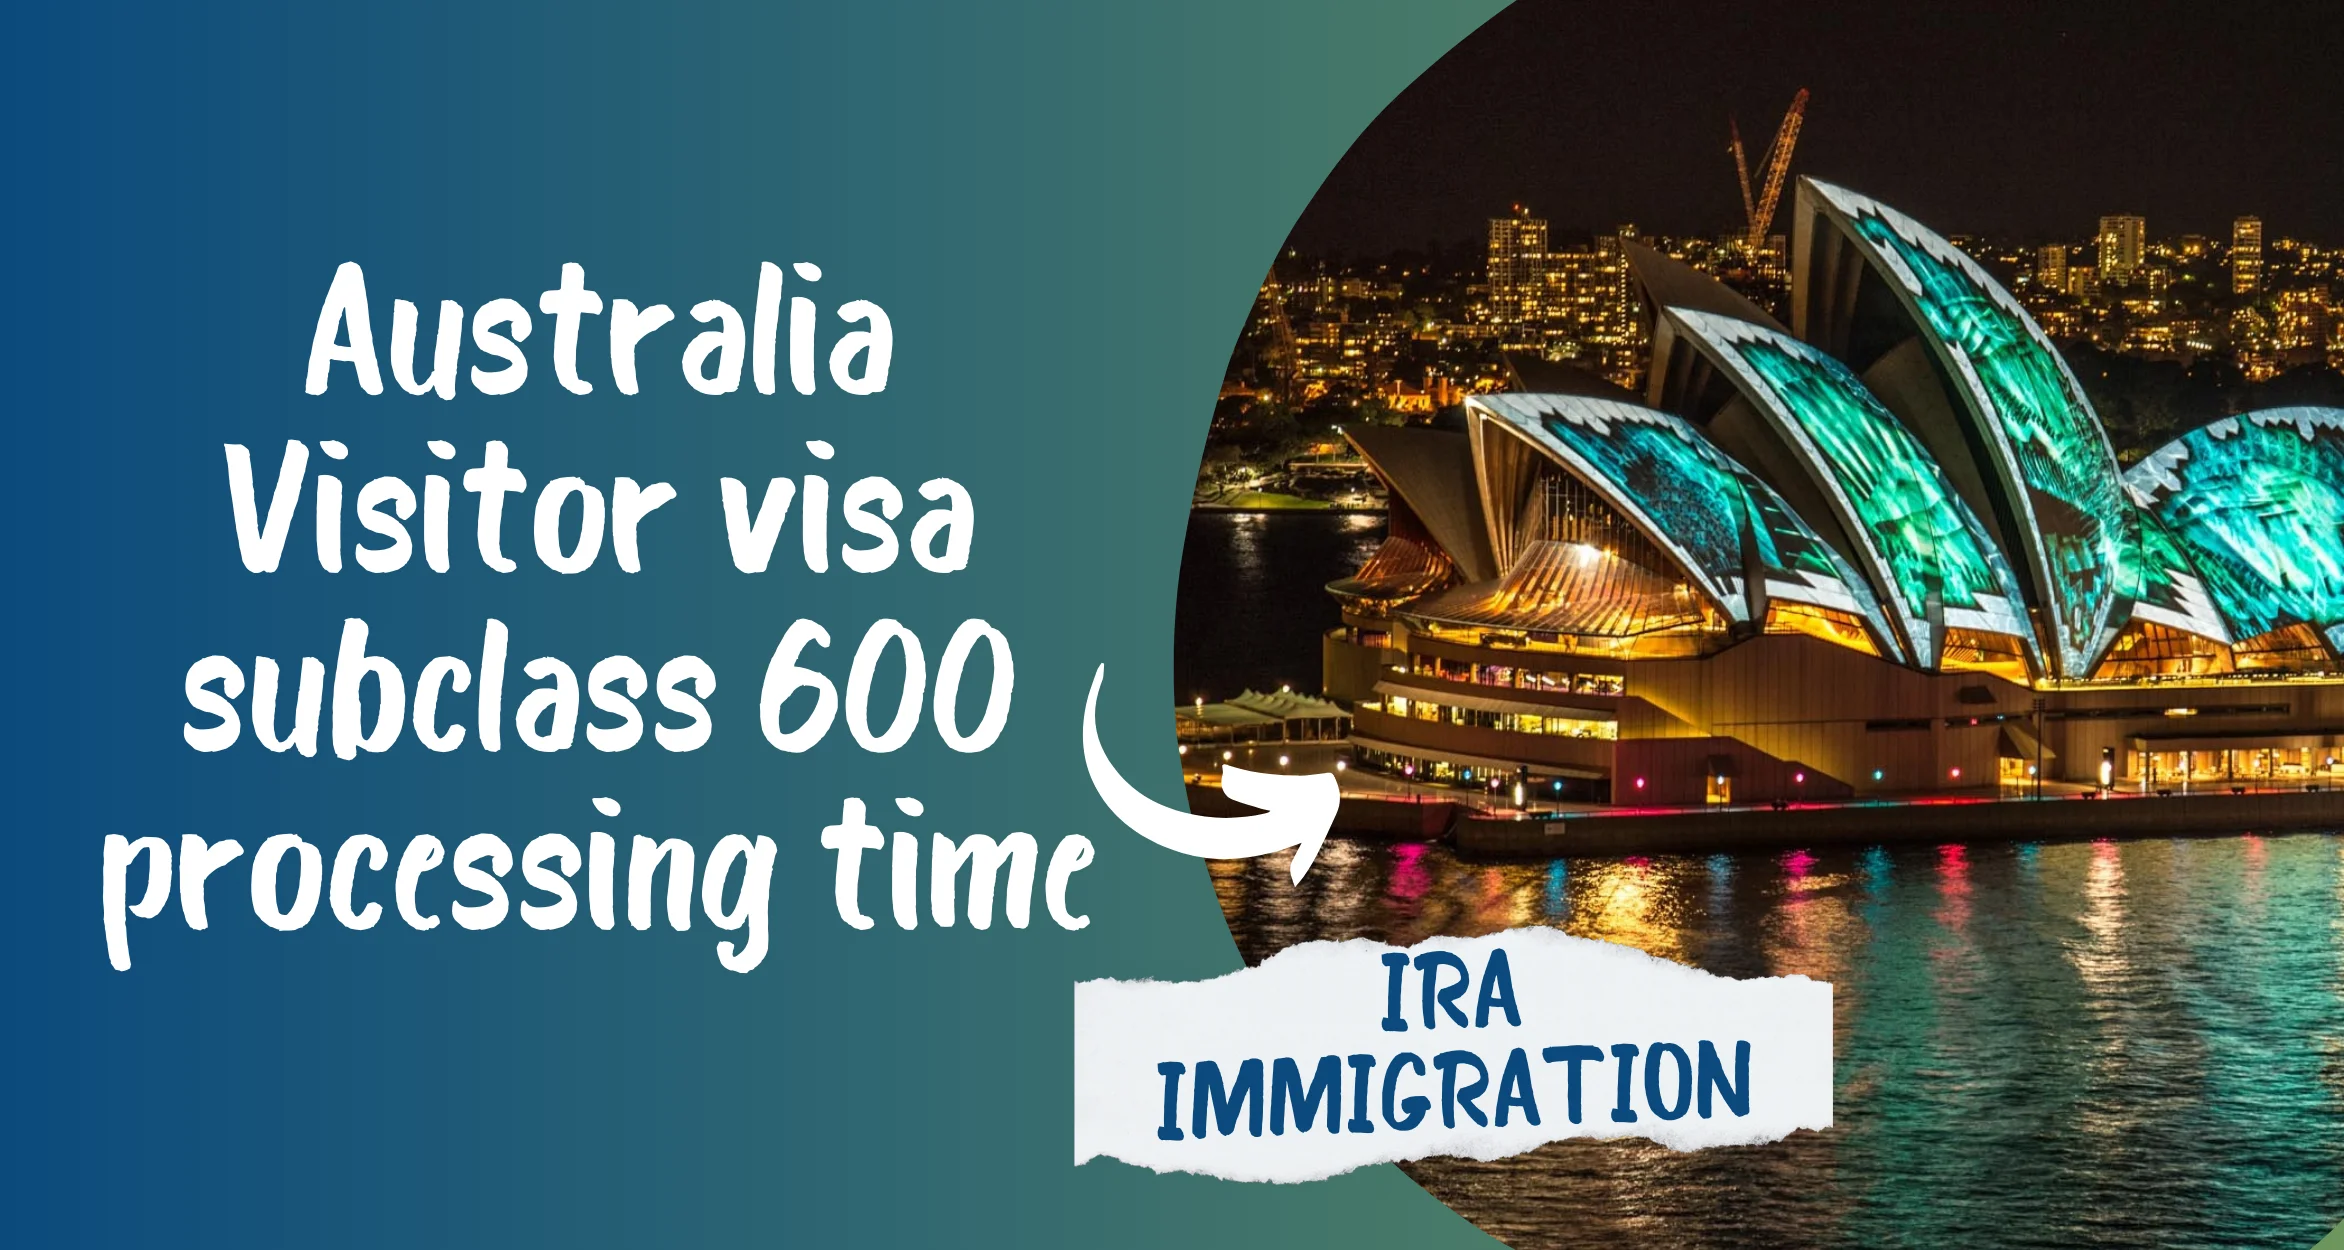 Australia Visitor visa subclass 600 processing time